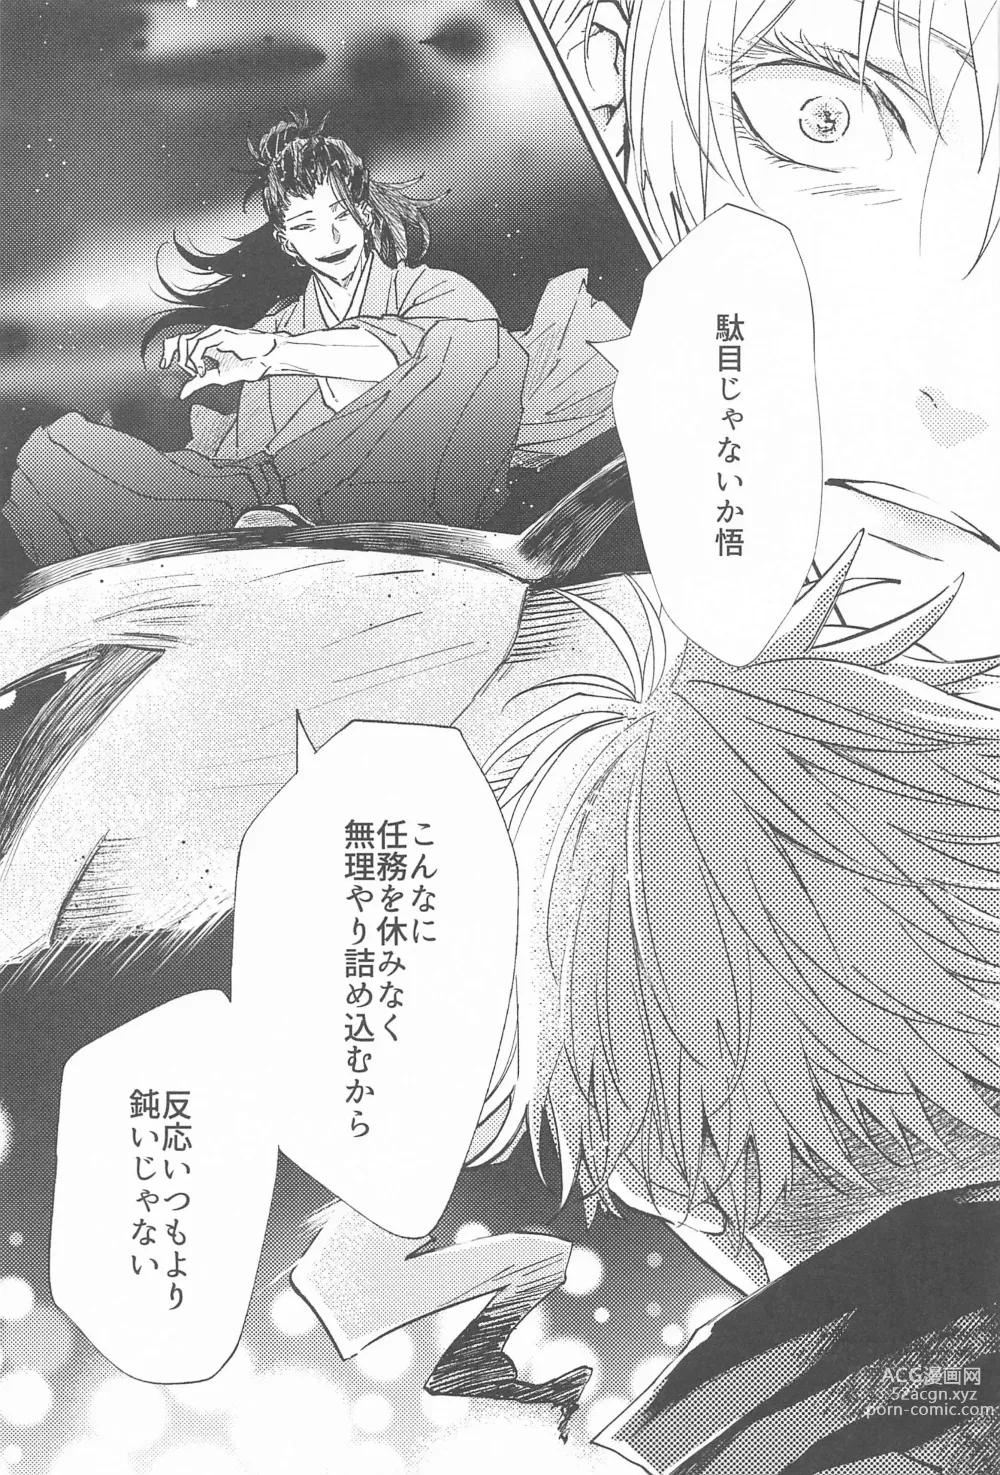 Page 10 of doujinshi Kojirase Blue to Koi Wazurai 2